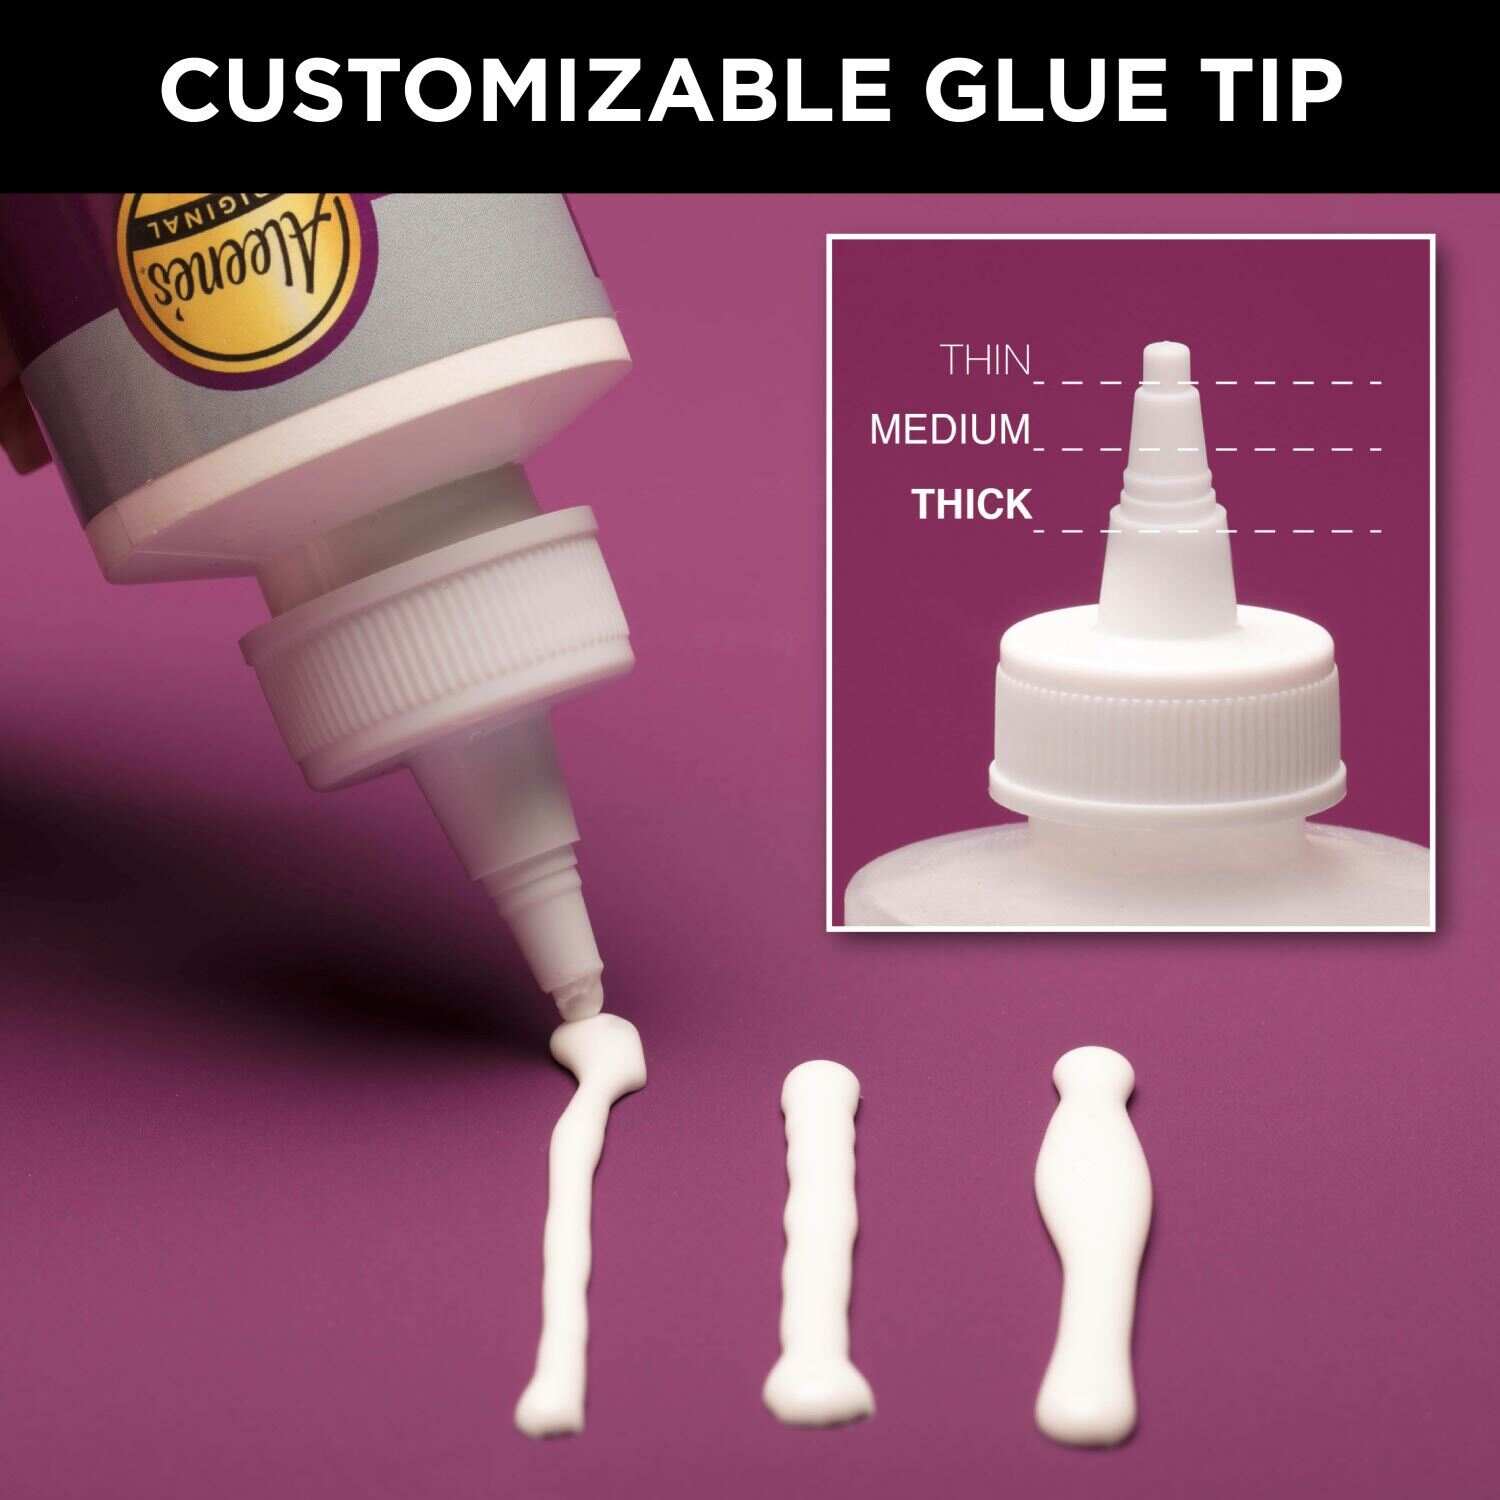 Quick Dry Tacky Glue @ Raw Materials Art Supplies